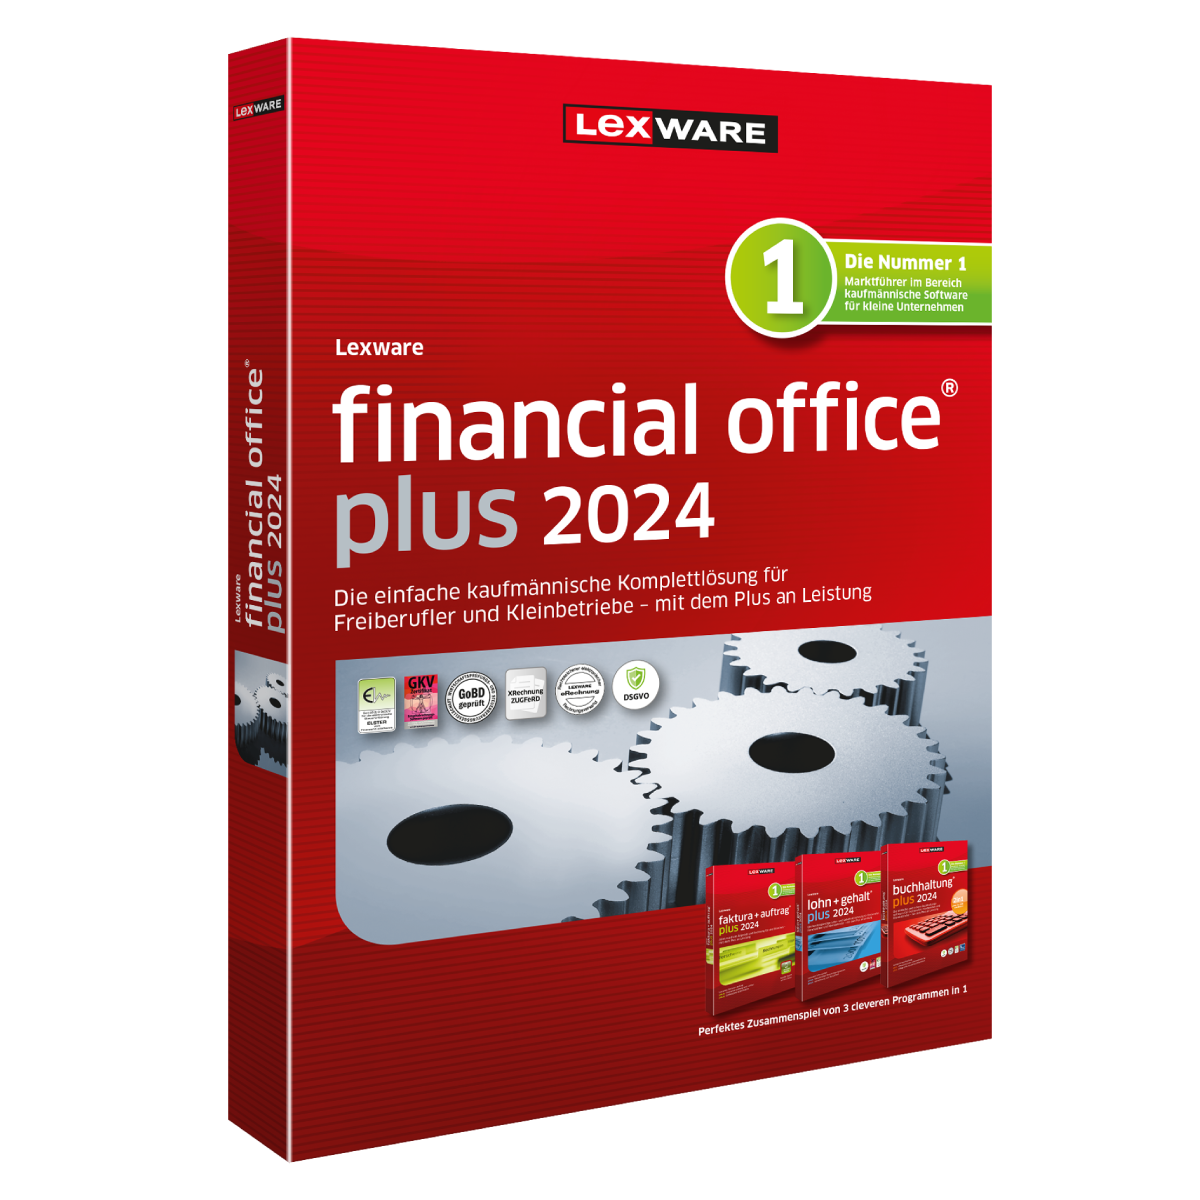 LEXWARE ESD financial office plus 2024 Download Jahresversio